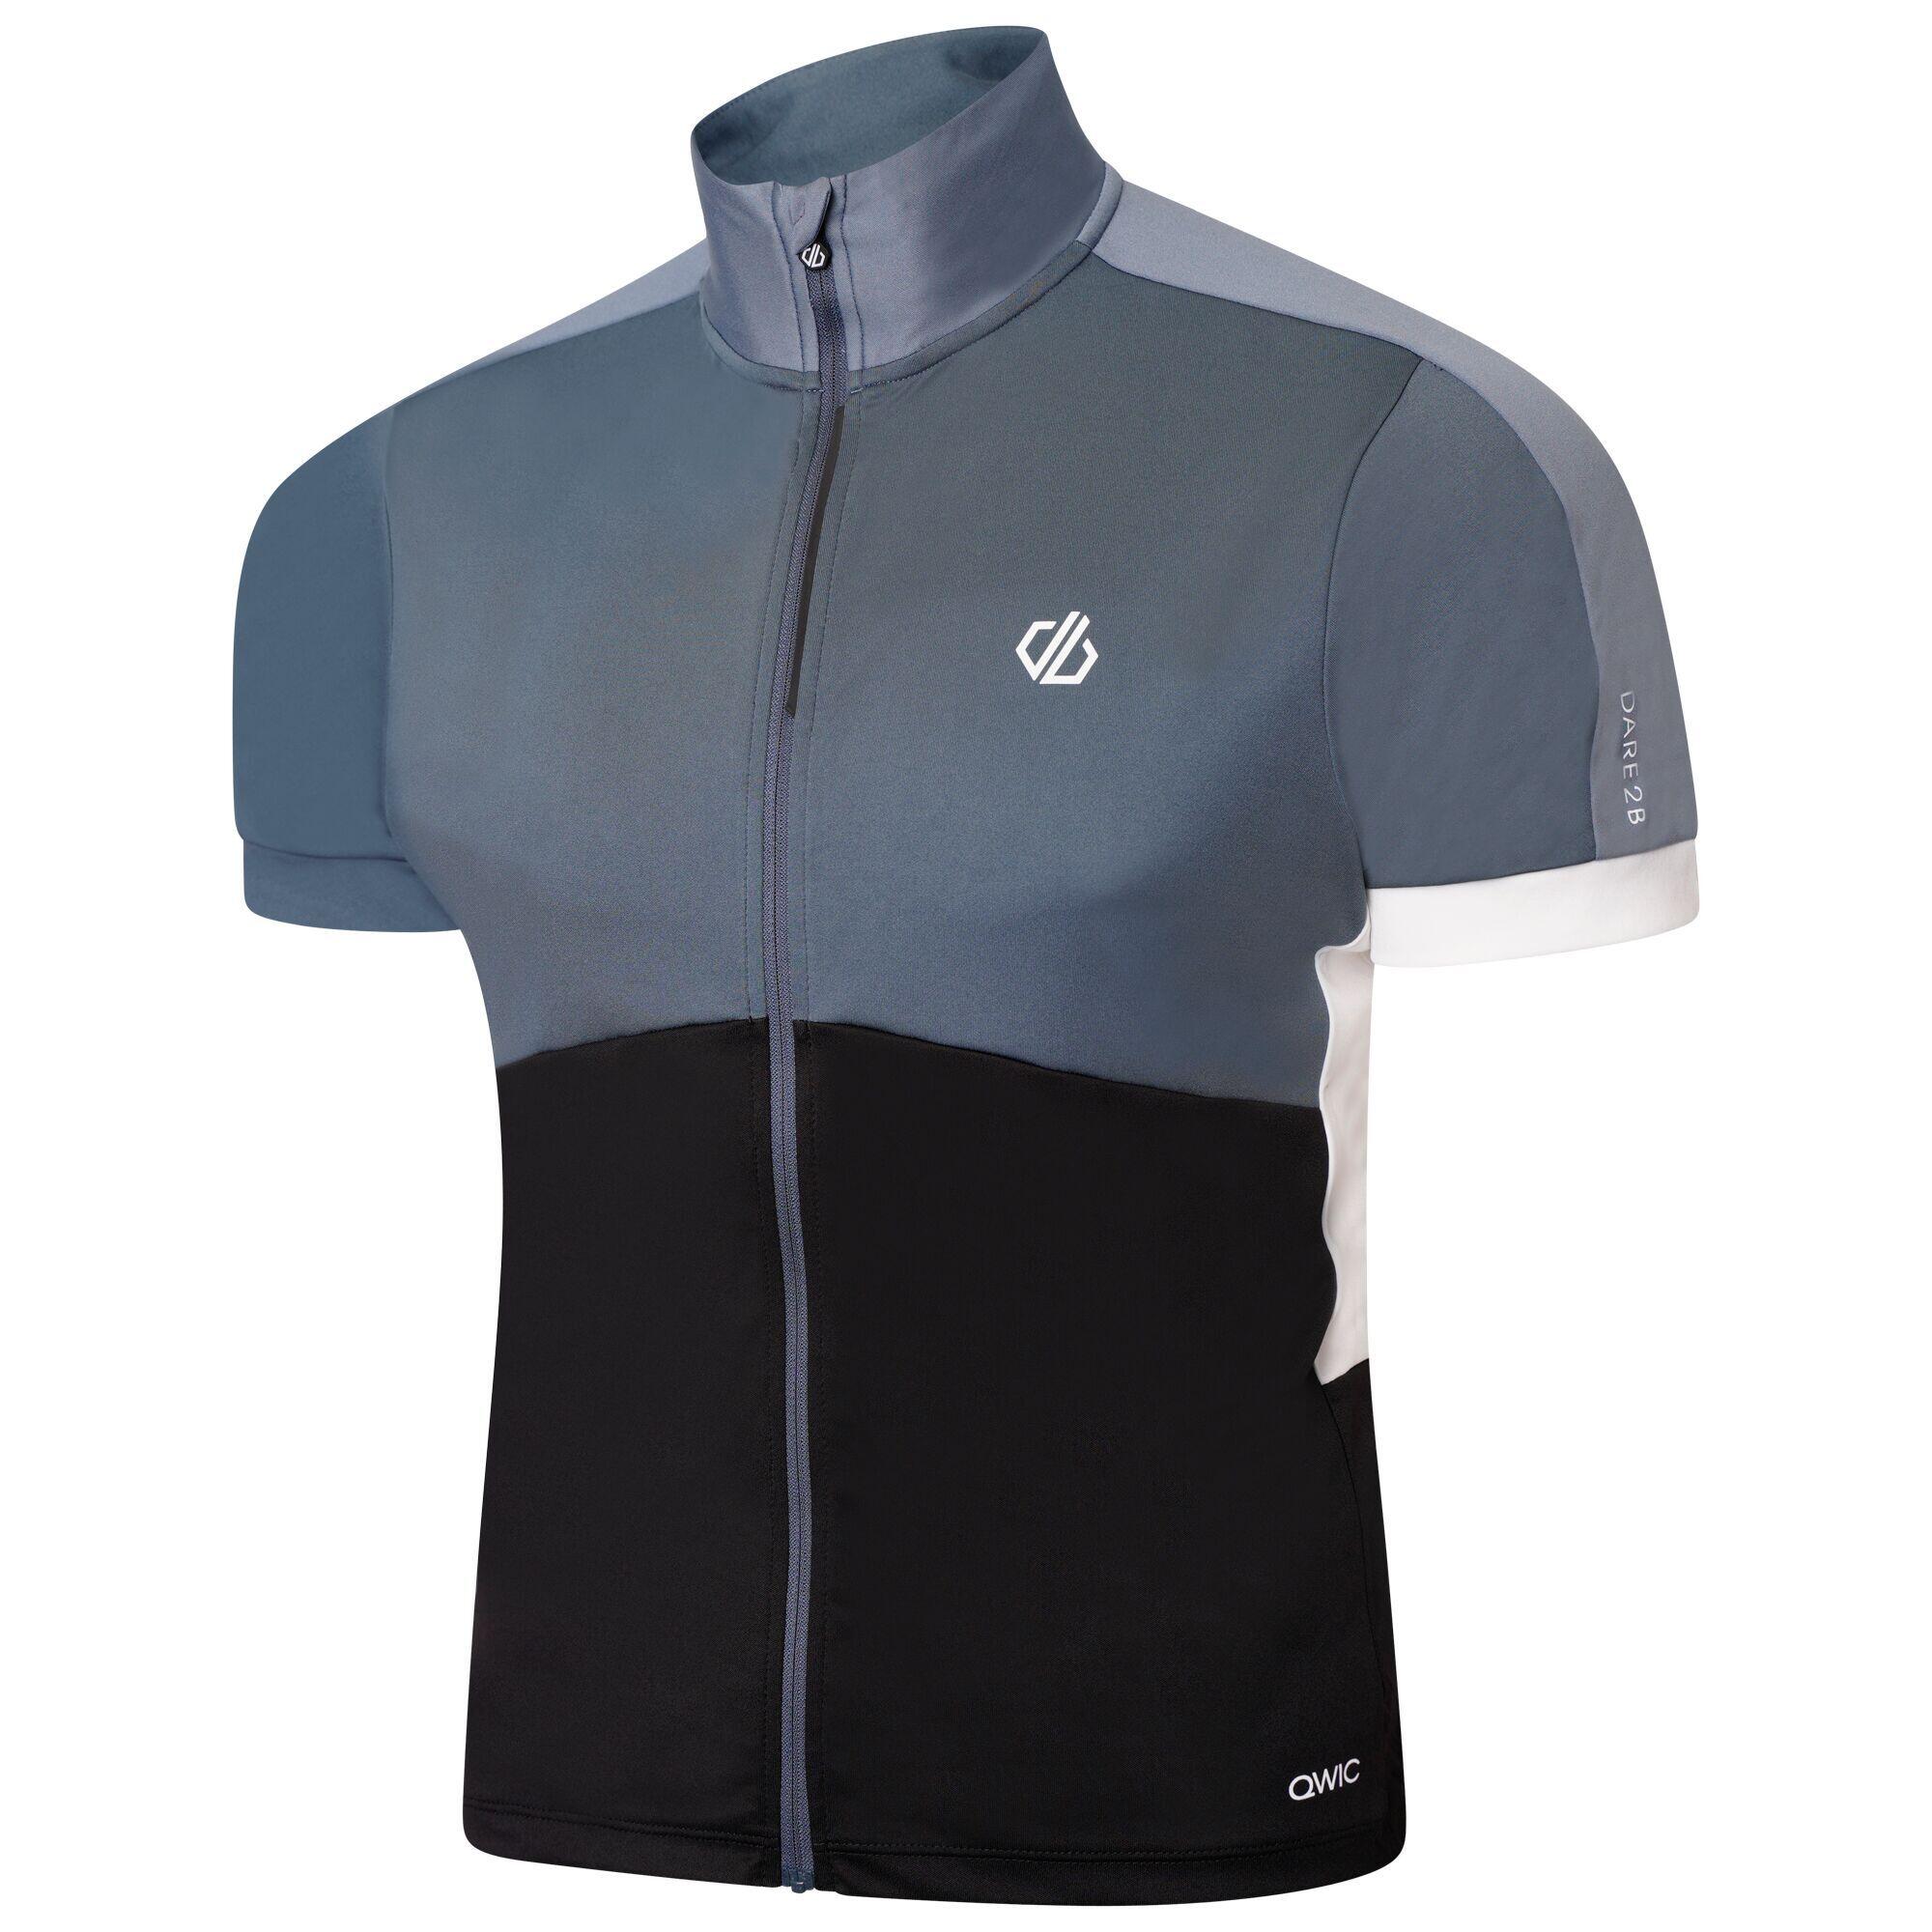 Protraction II Men's Cycling Full Zip Short Sleeve T-Shirt - Black / Grey 6/7